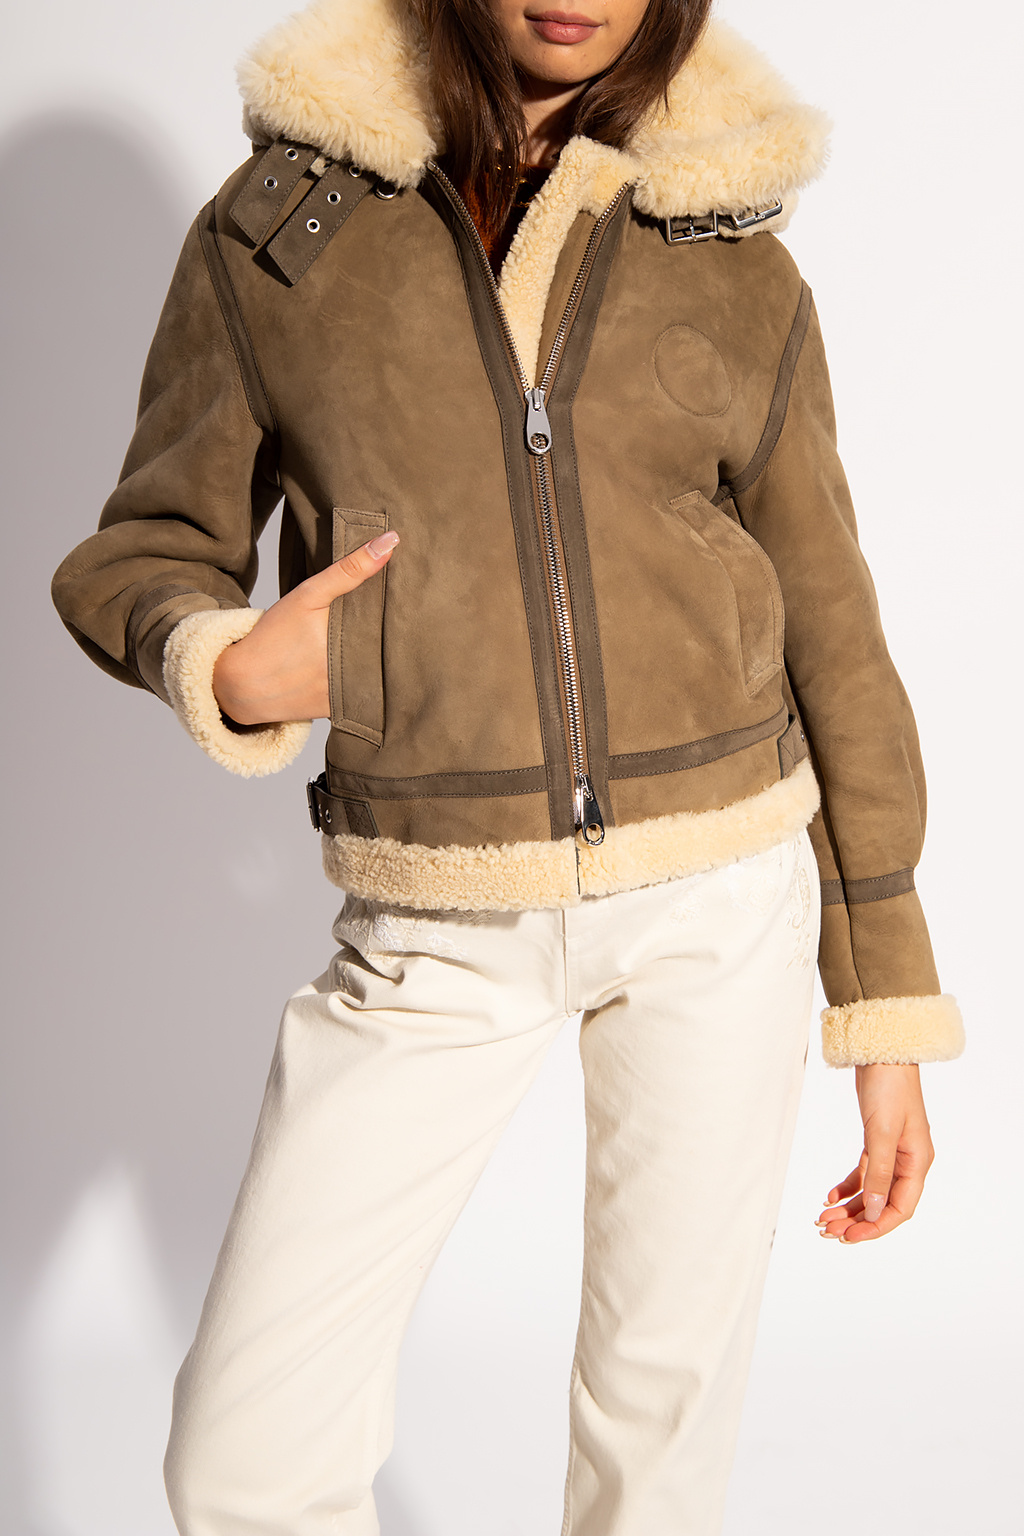 Chloé Shearling jacket with pockets